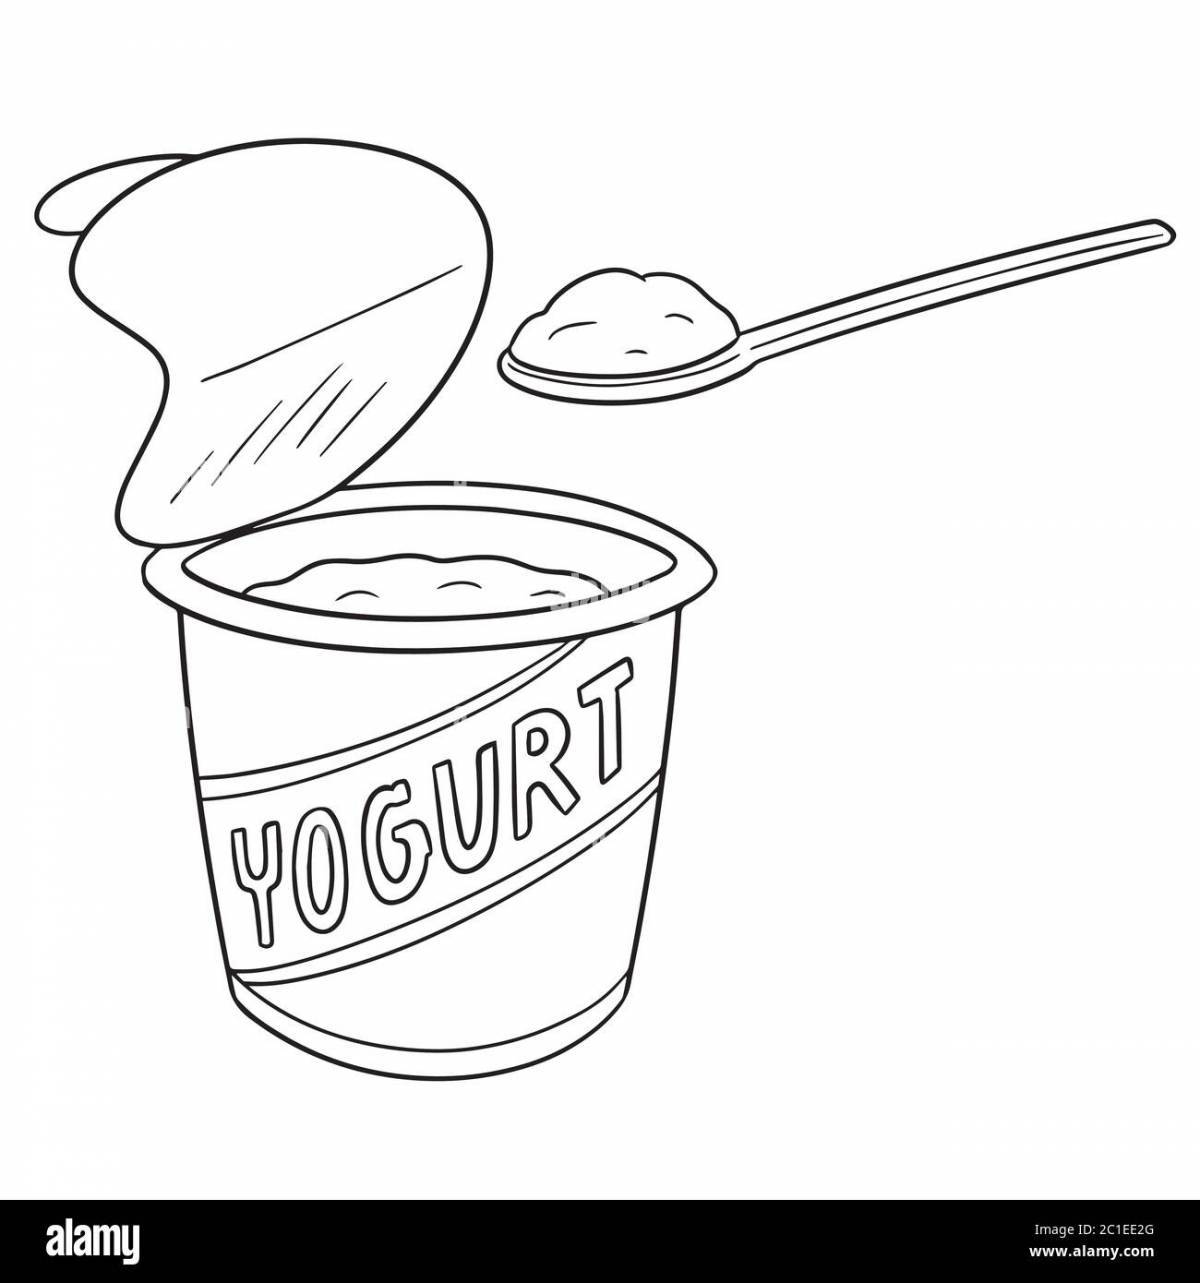 Sparkling yogurt coloring page